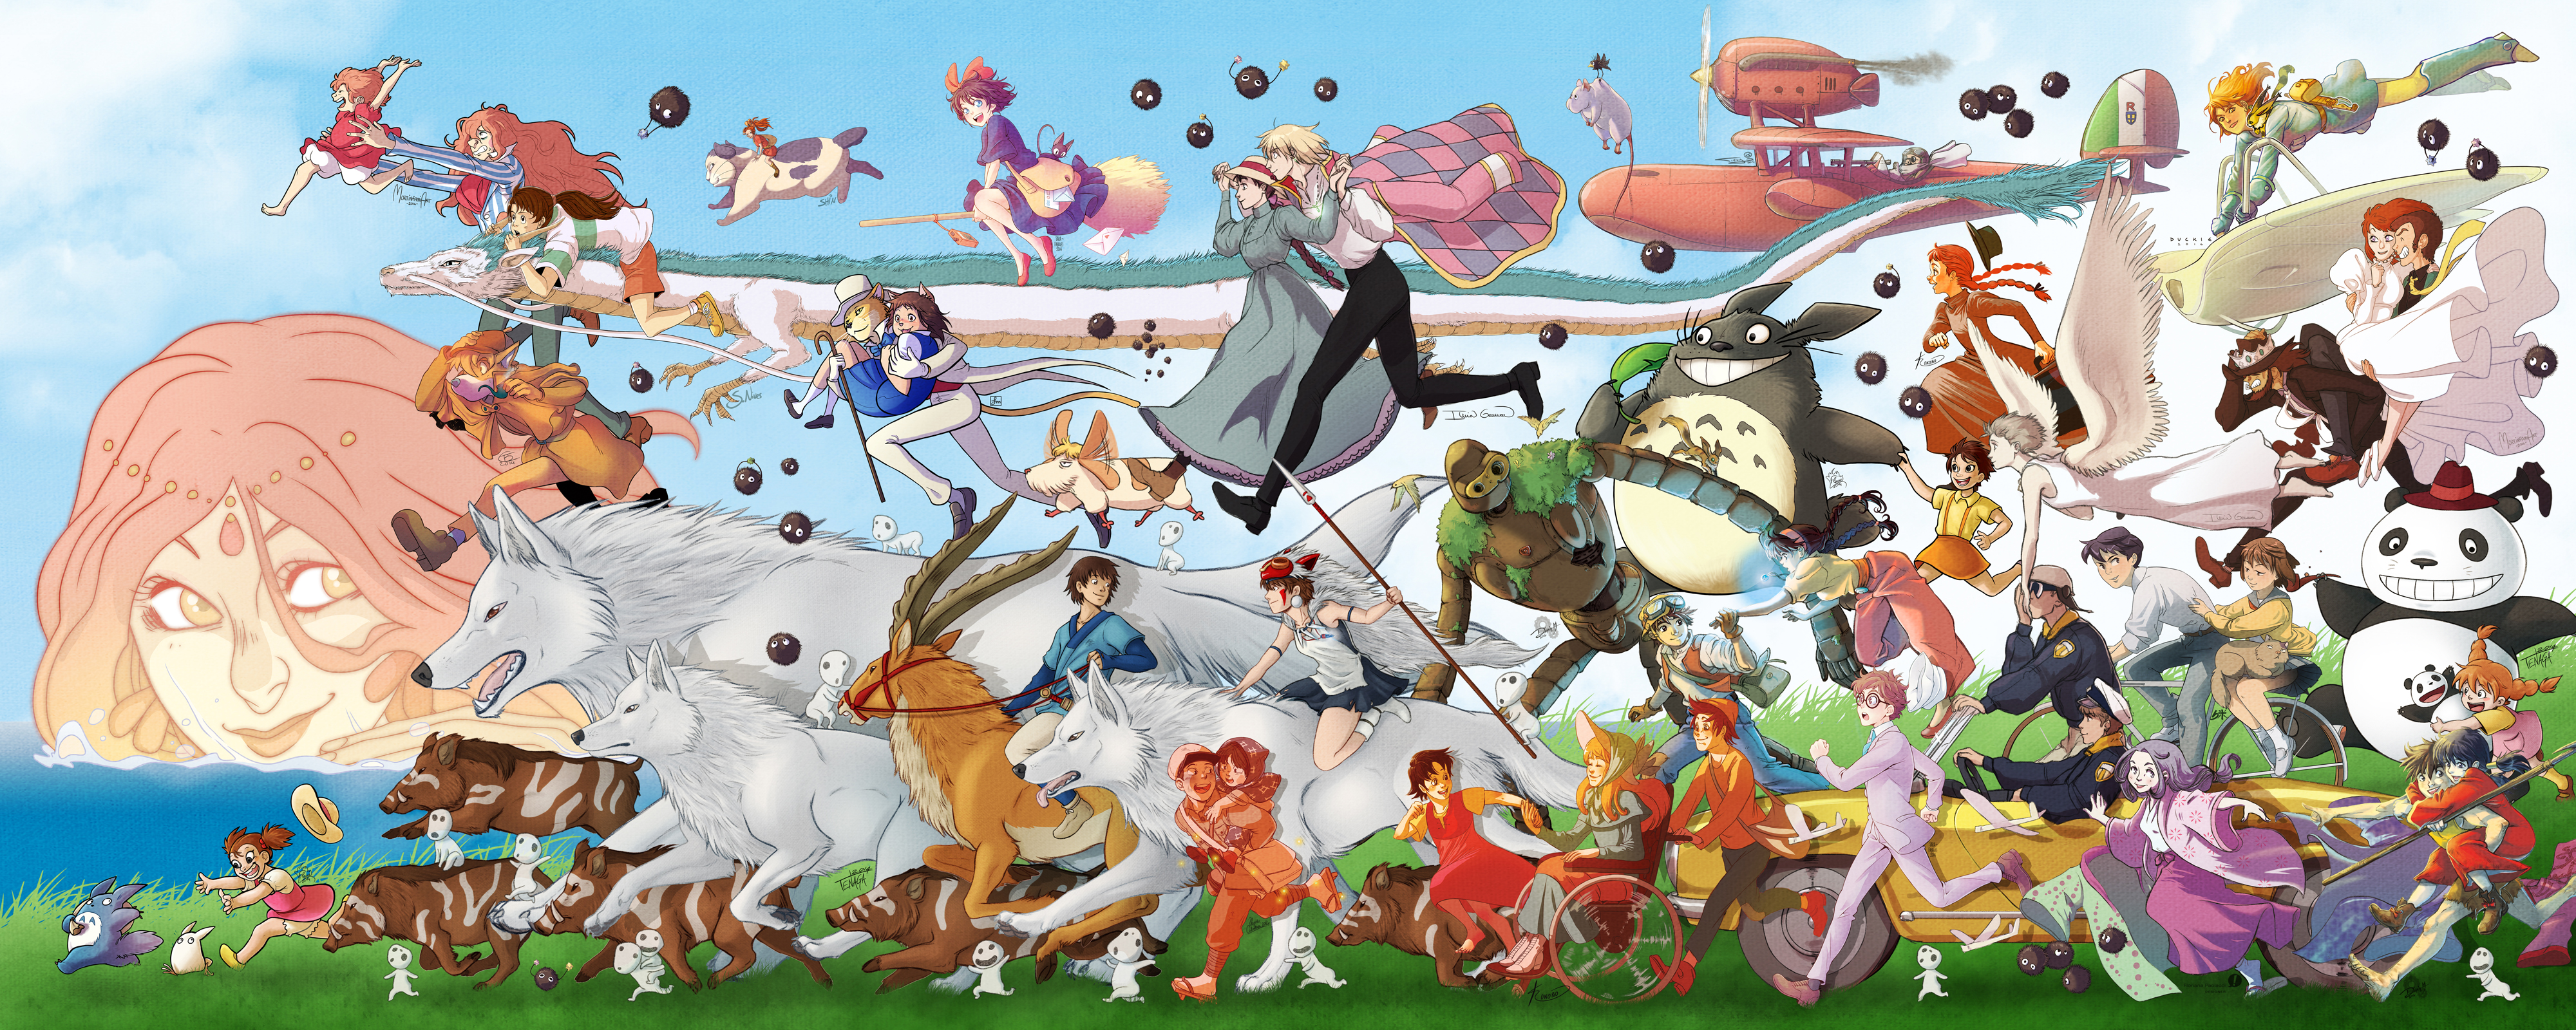 Ghibli parade! by Tenaga on DeviantArt